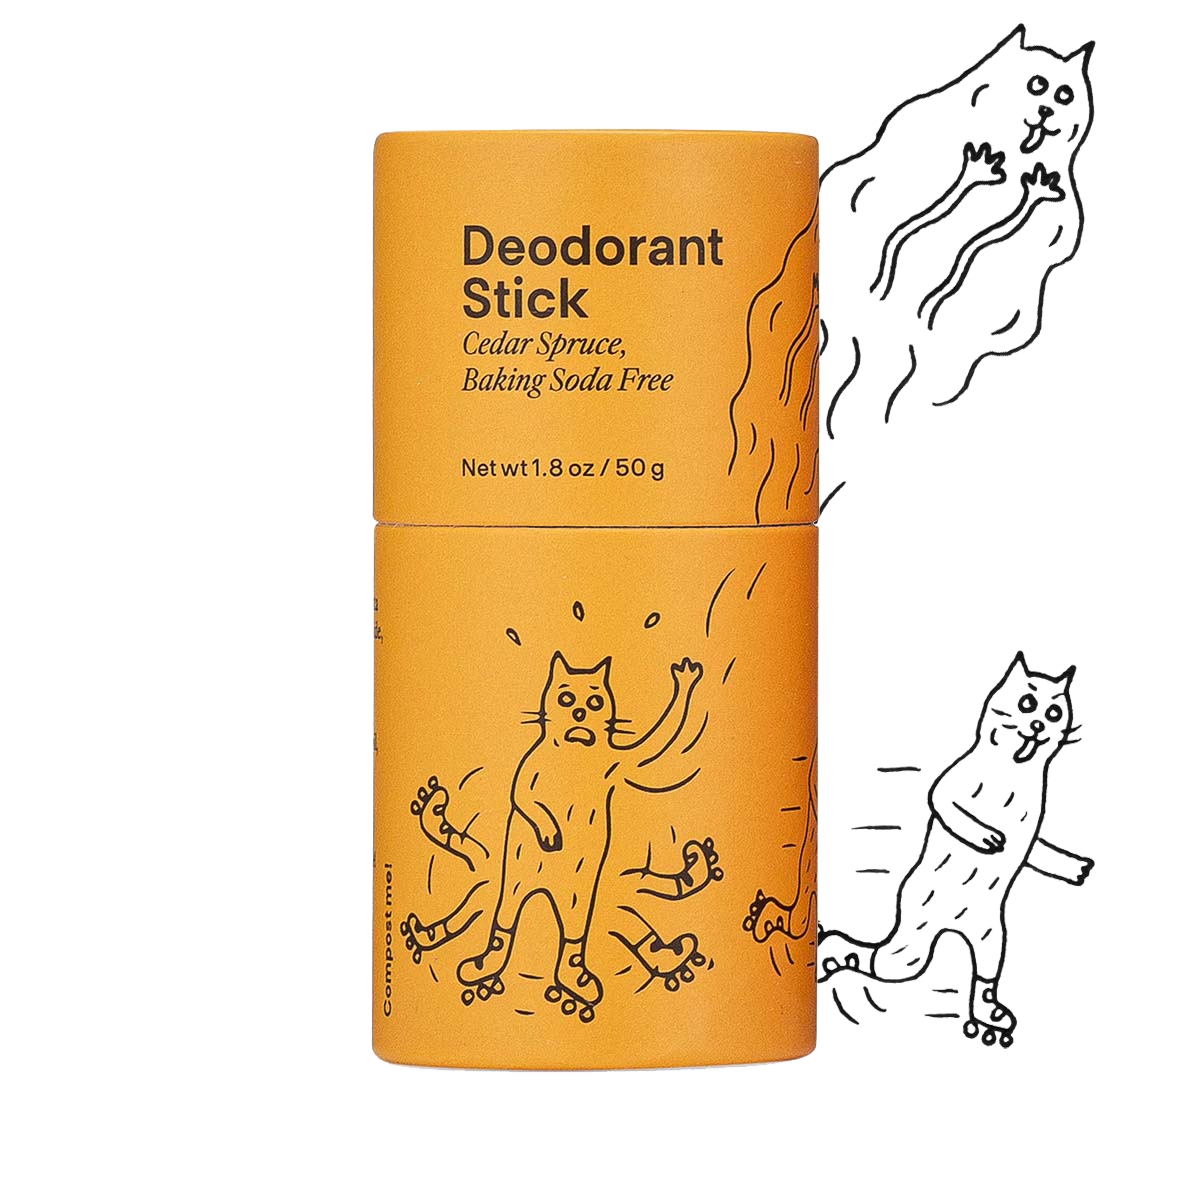 Deodorant Stick - Cedar (Baking Soda Free)